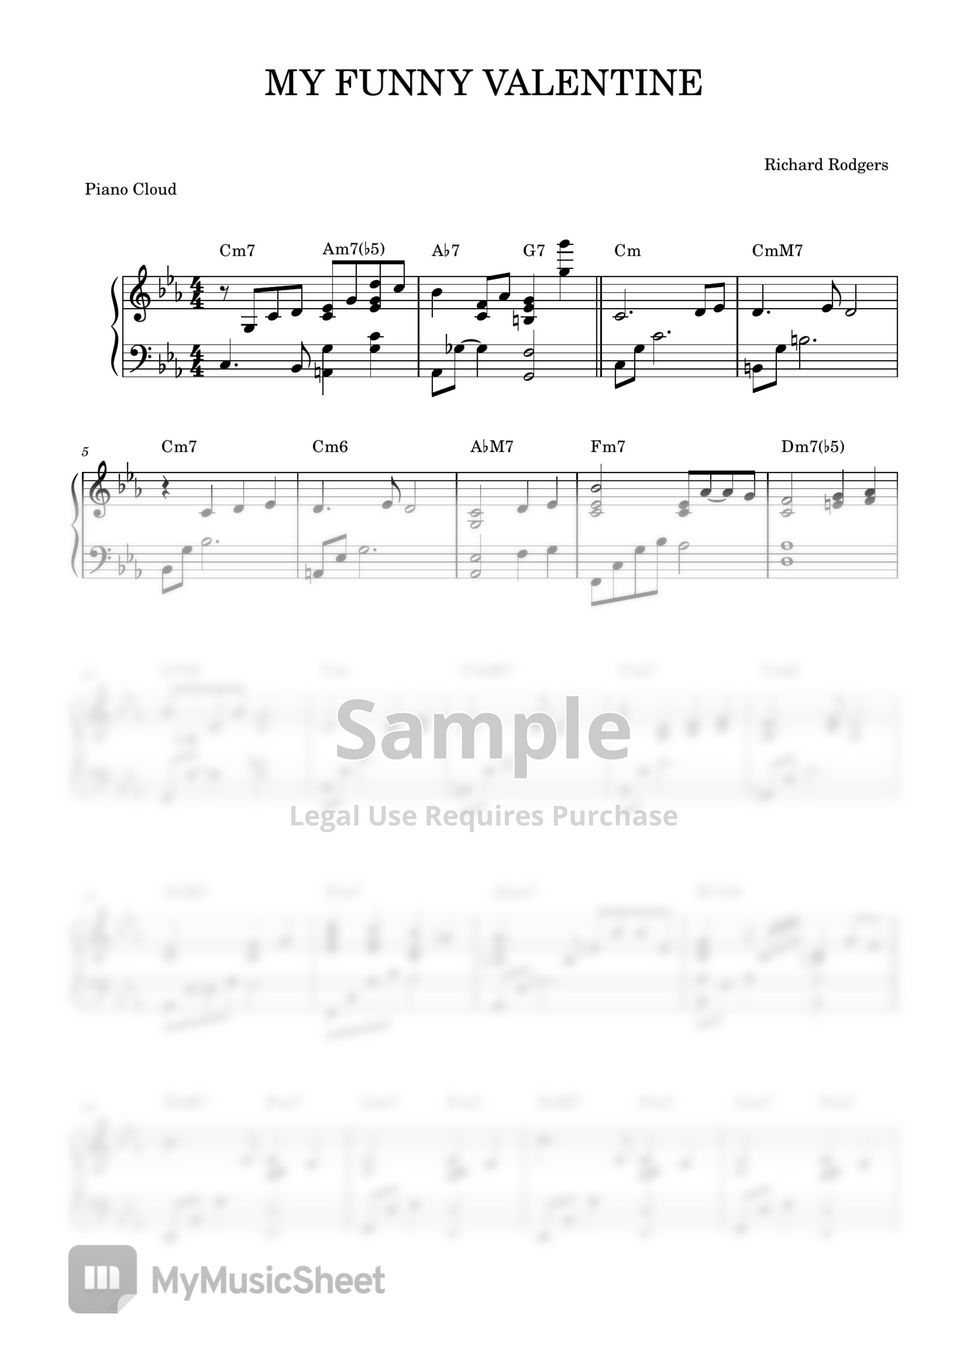 Richard Rodgers - My Funny Valentine (My Funny Valentine/쉬운재즈피아노악보/jazz piano sheet) by Piano Cloud